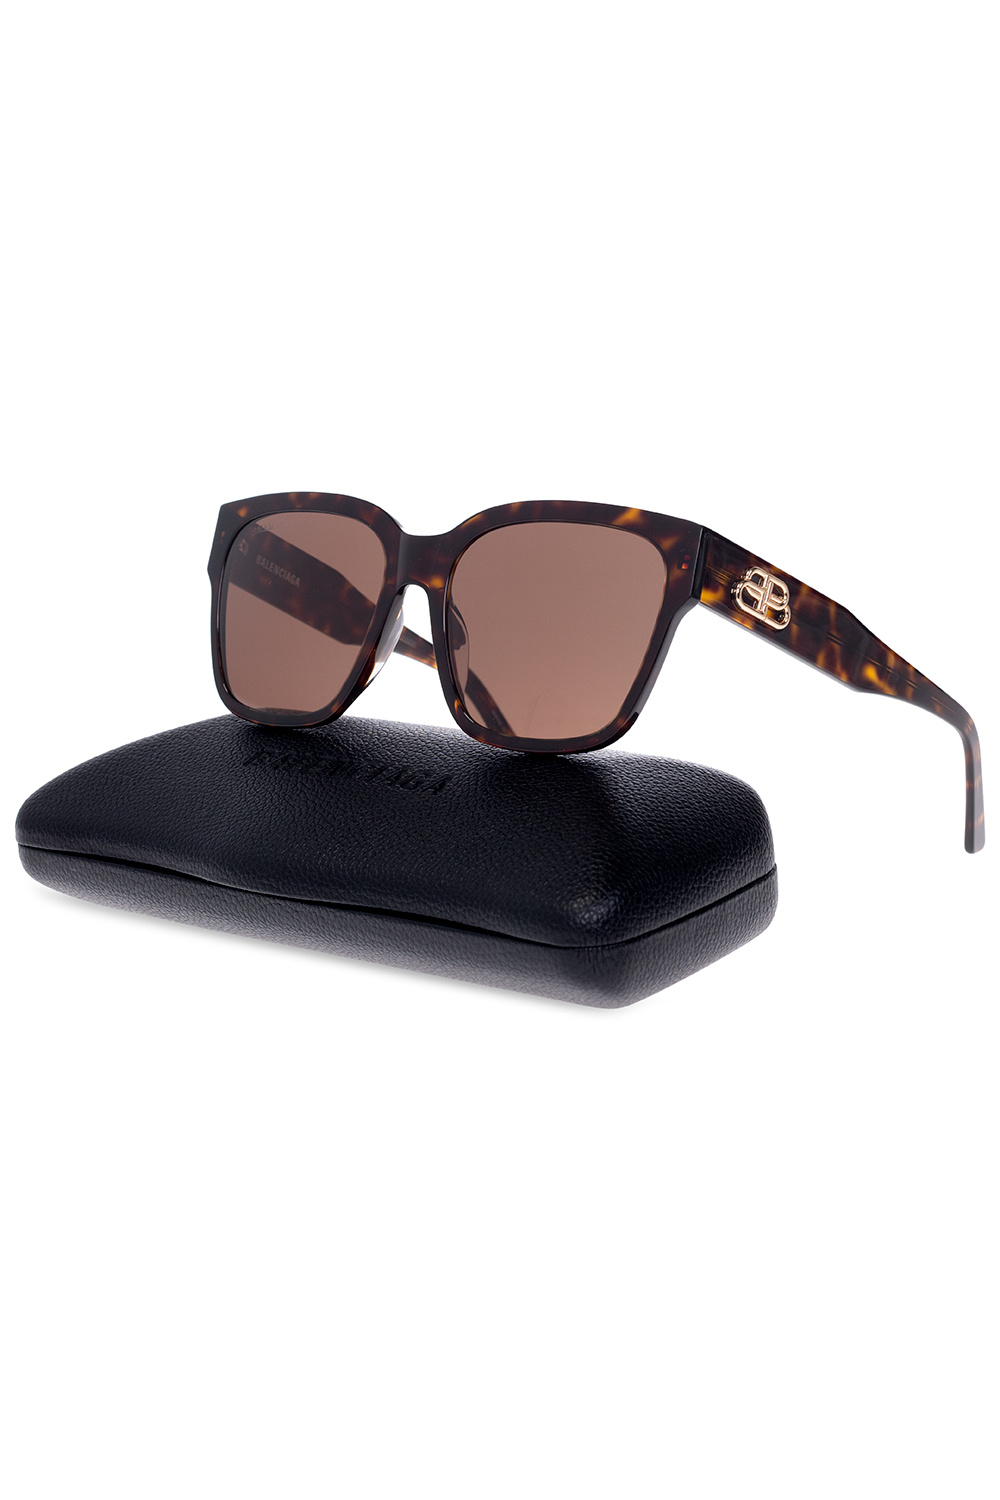 Balenciaga ‘Flat Square’ Jimmy sunglasses